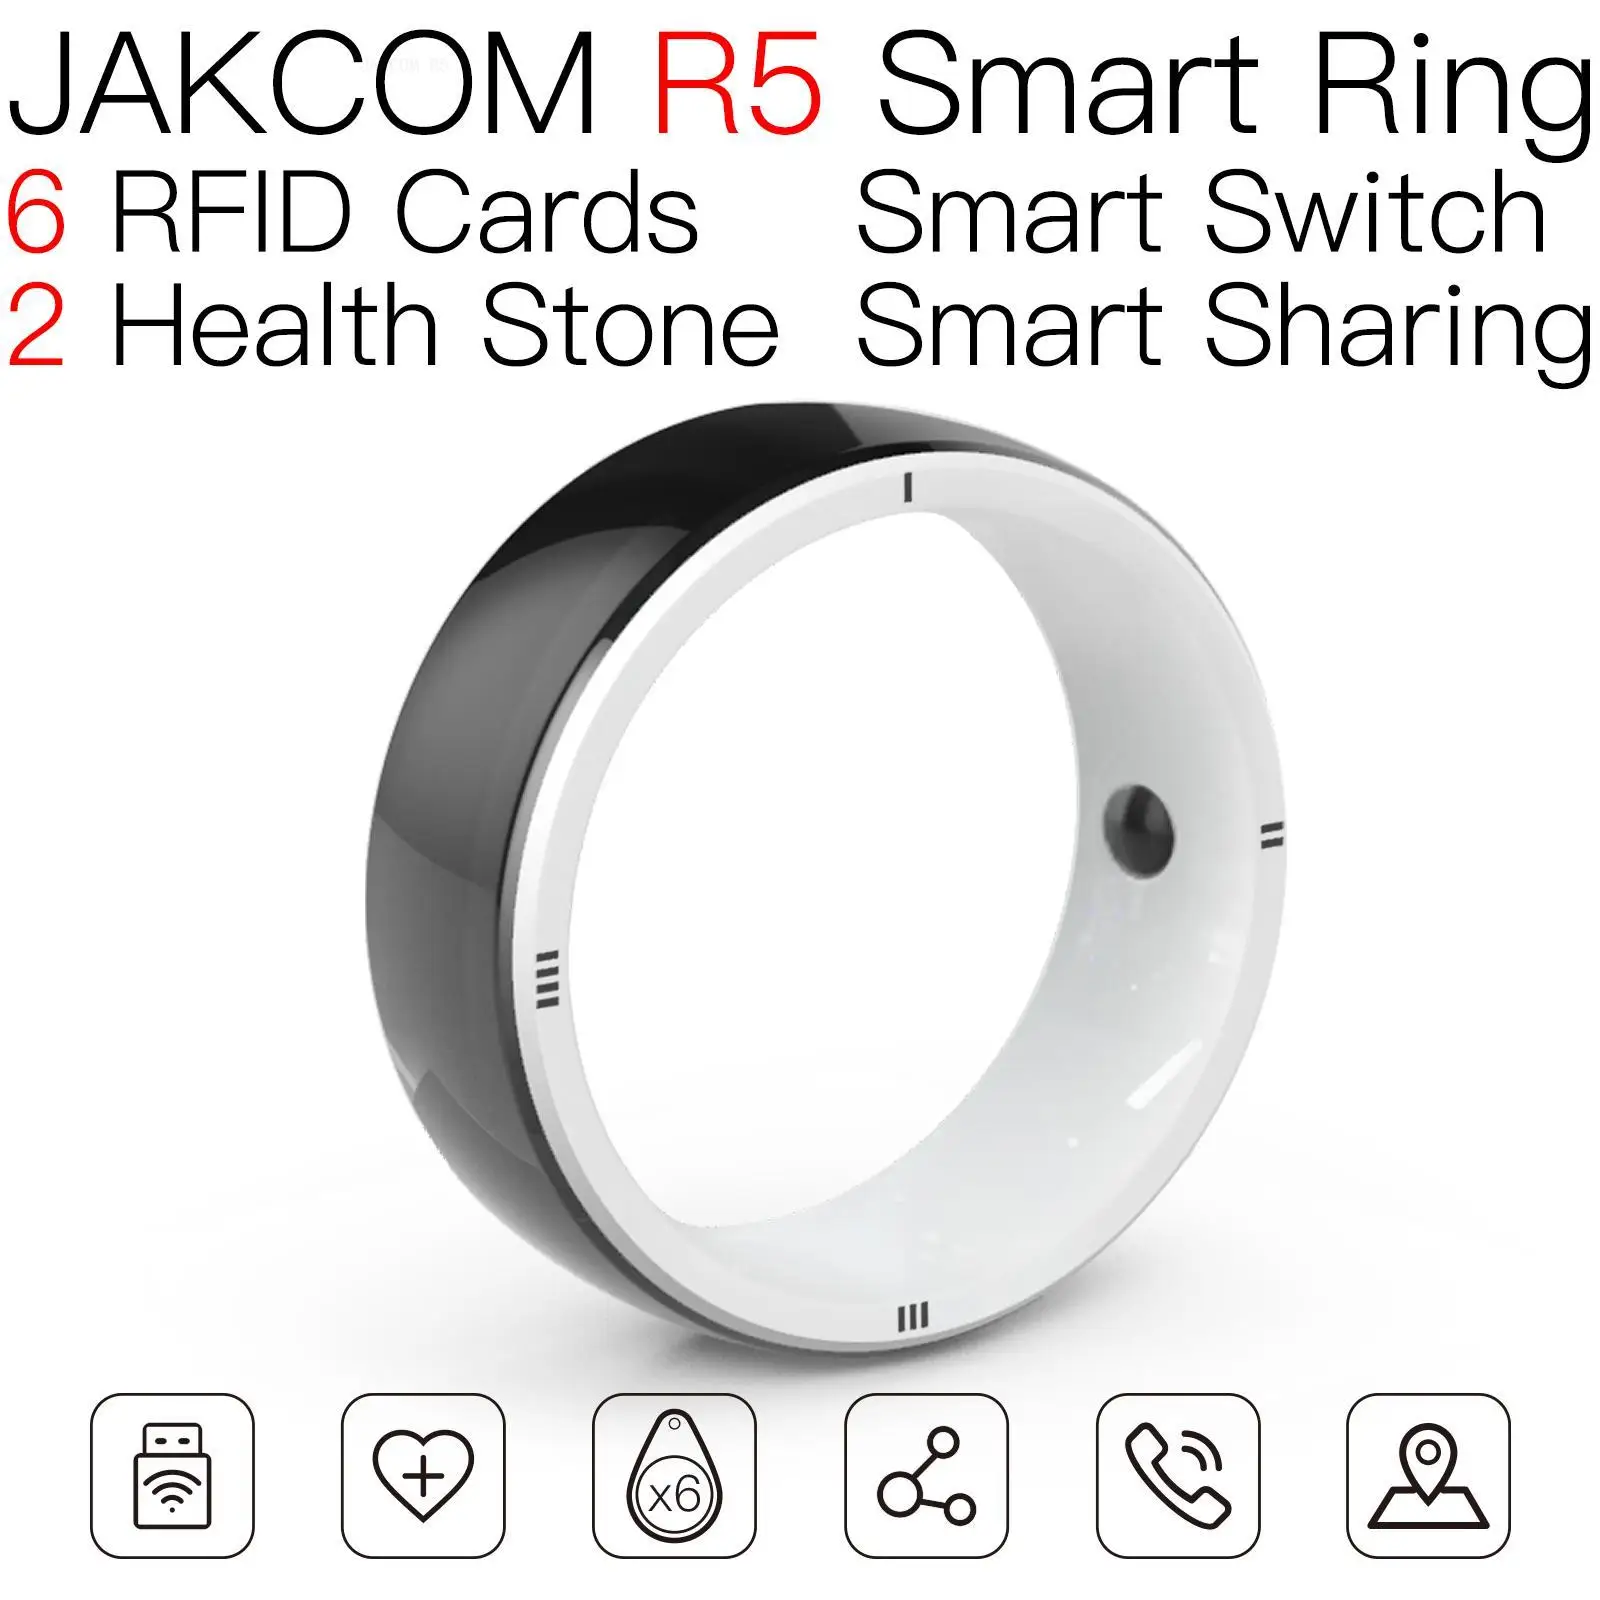 

JAKCOM R5 Smart Ring Super value than flipper zero cr80 ruthenium rfid for pets tag 433mhz name uid s50 microchip implant nfc